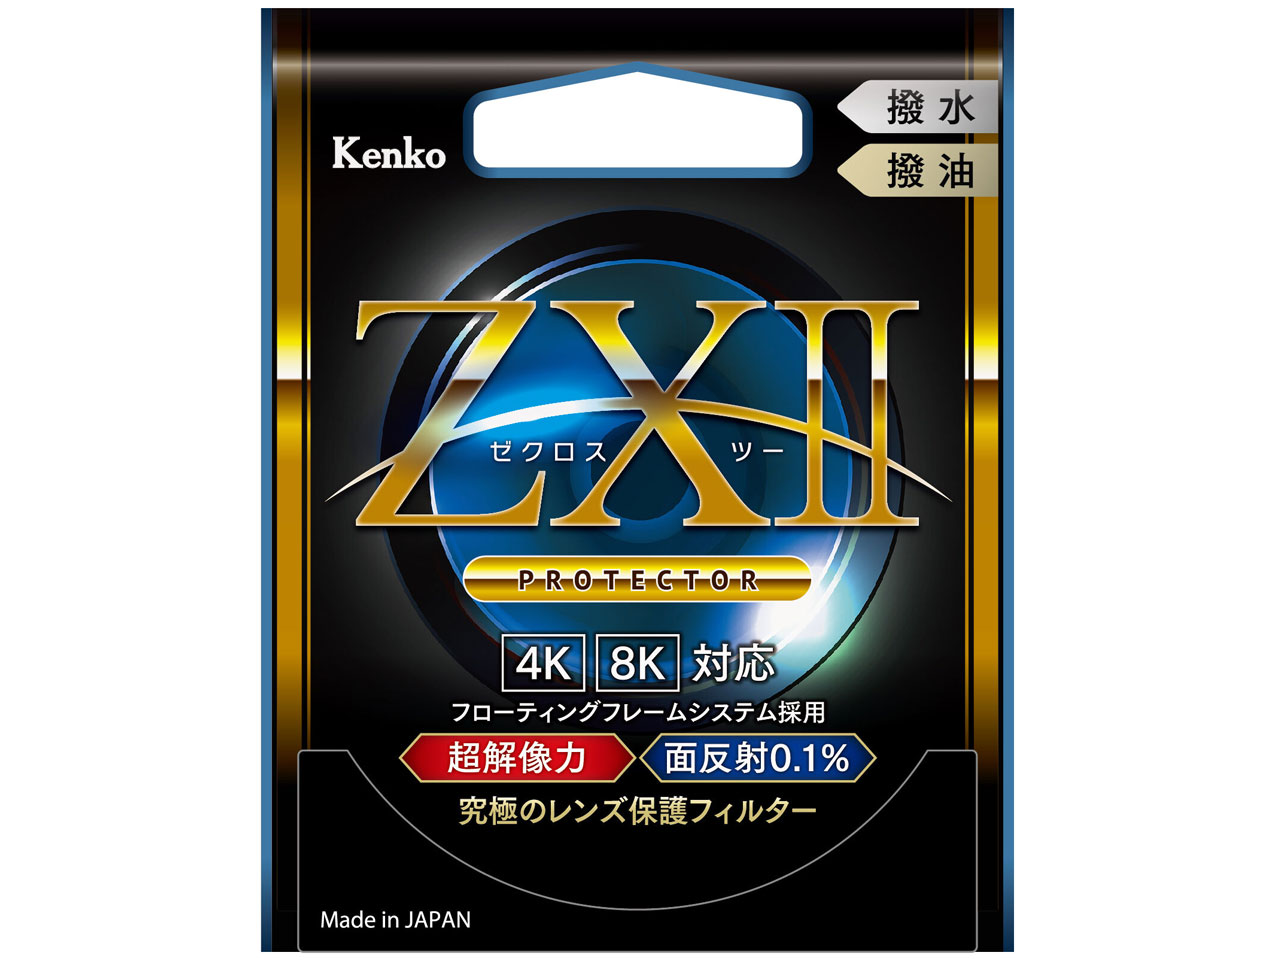 ZR01コート 採用で 面反射0.1％の超低反射を実現 新品 Kenko ZXII 高級 おすすめ プロテクター メール便 ケンコー トキナー 67mm 送料無料 代引き不可